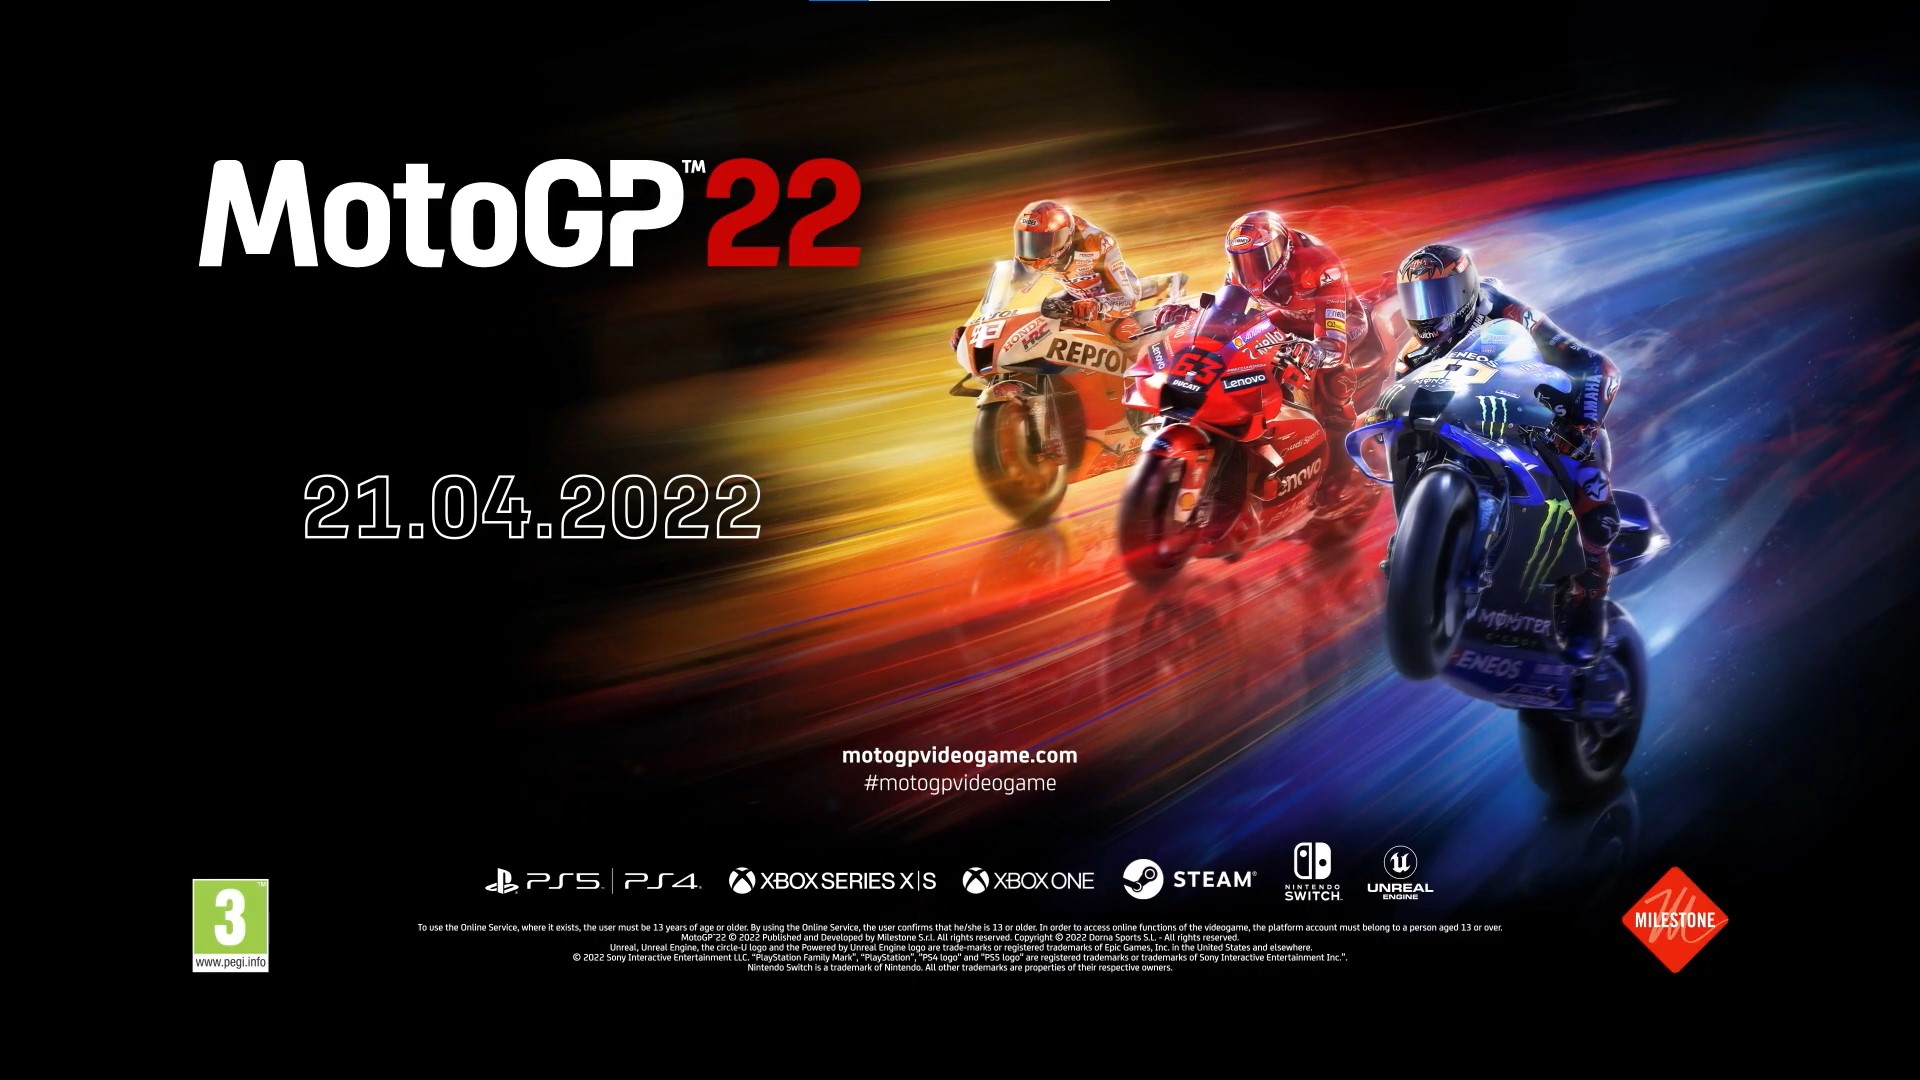 MotoGP 22 receives new gameplay trailer